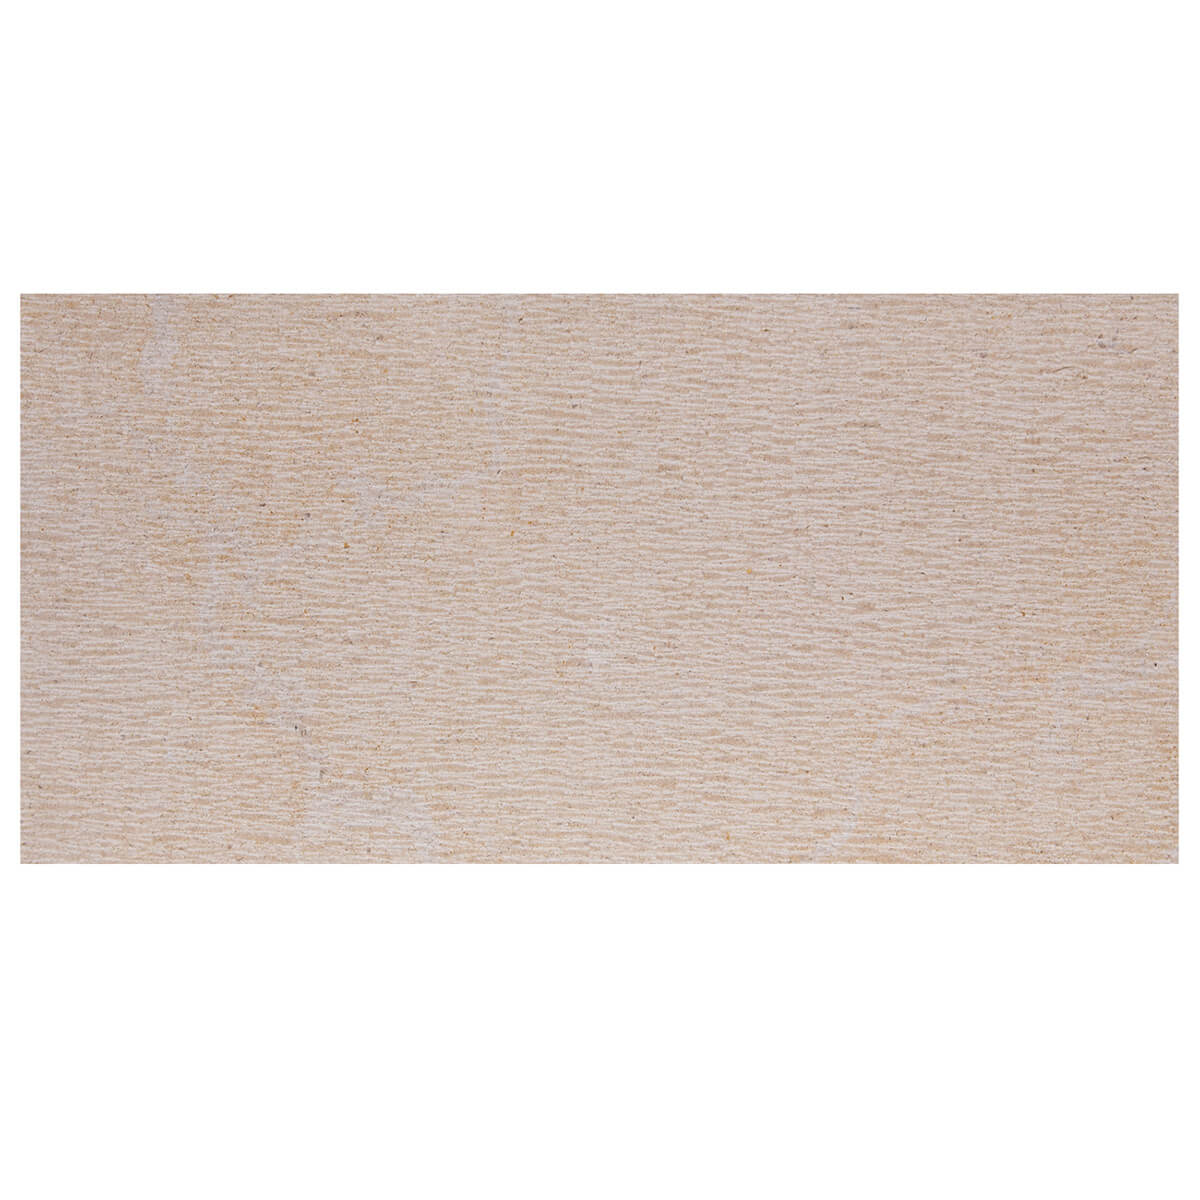 haussmann corton beige limestone rectangle natural stone field tile 12x24 linen